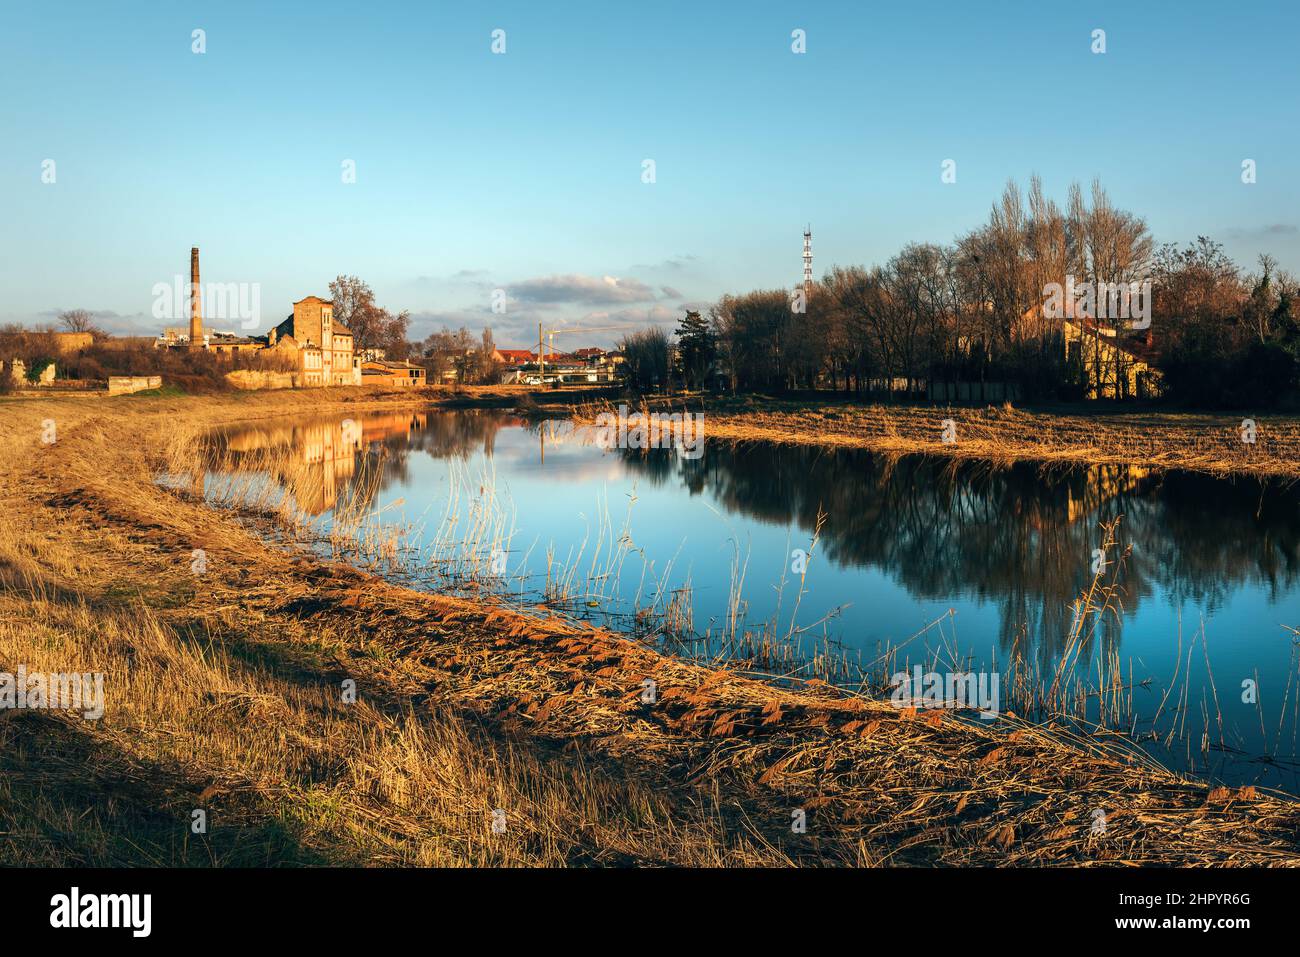 Begej still water in Town of Zrenjanin, Vojvodina province in Serbia. Autumn scenery landscape. Stock Photo